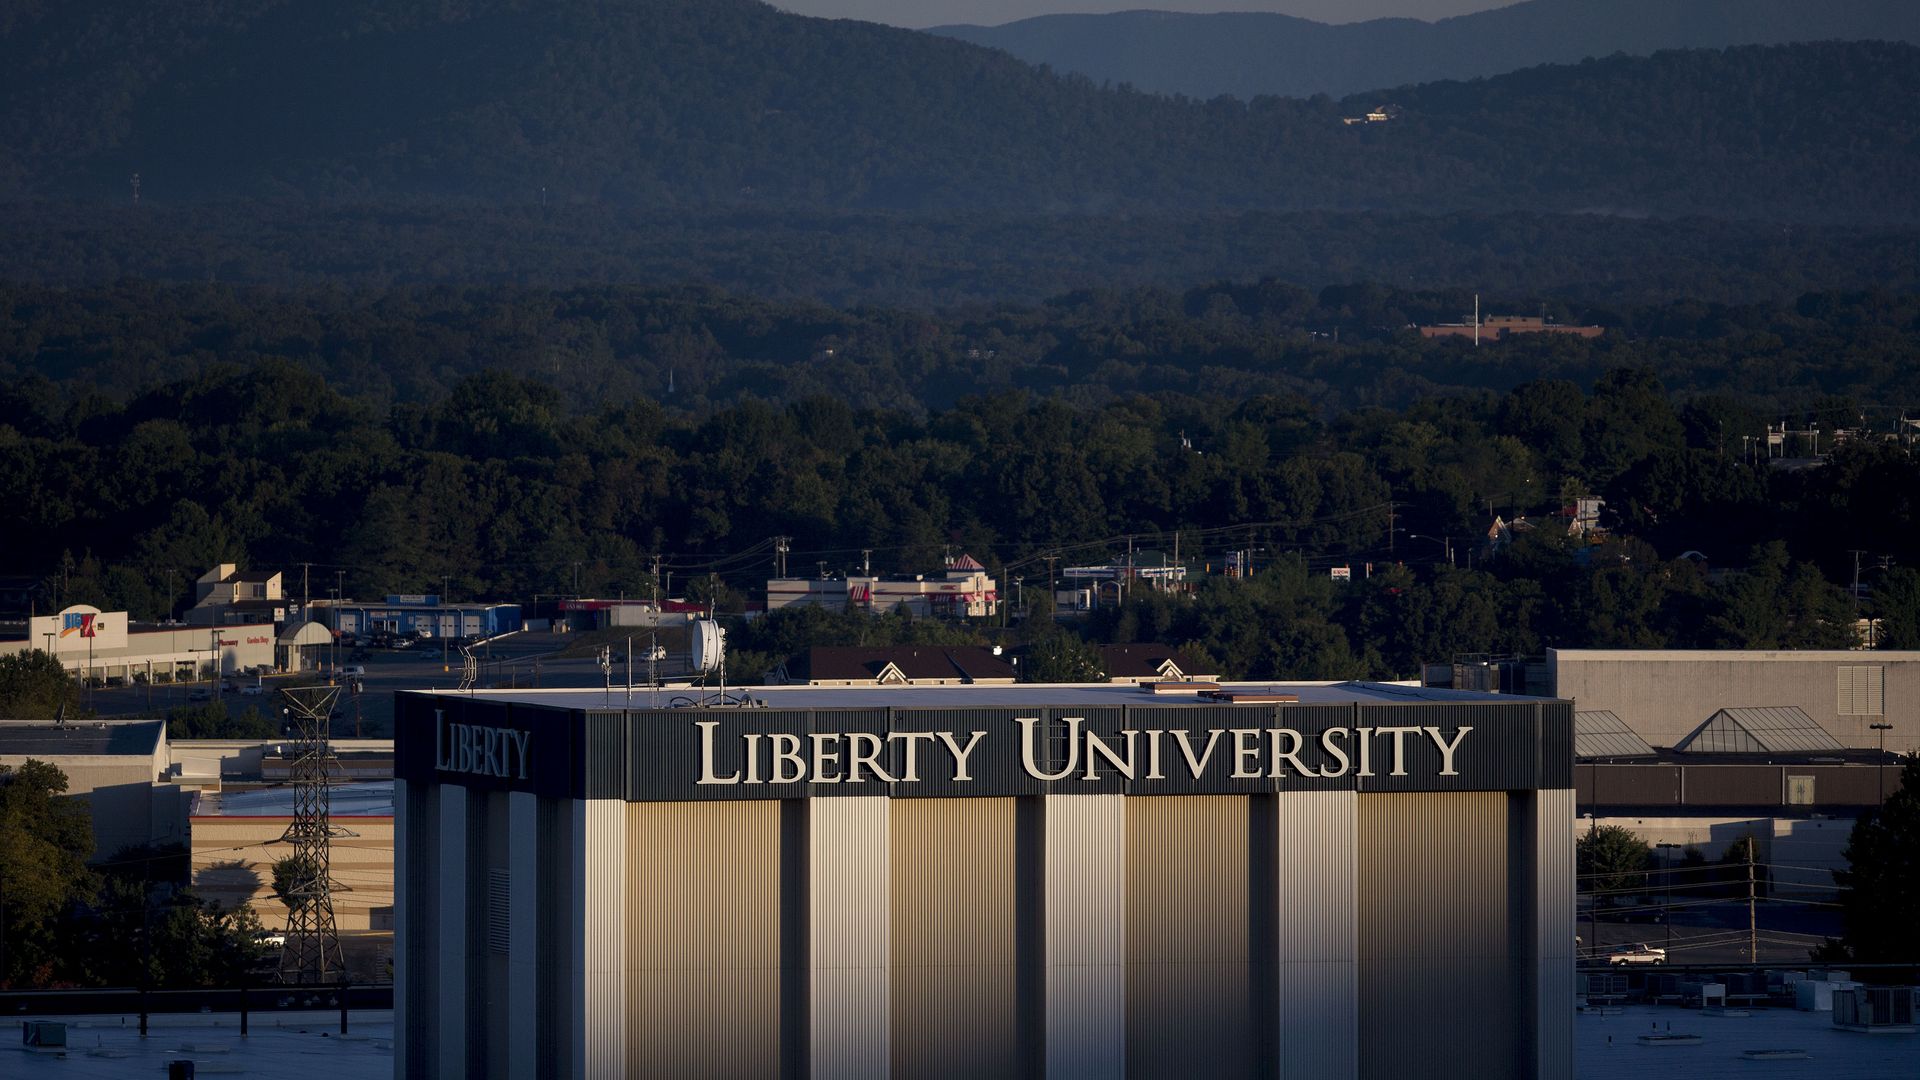 The Liberty University campus in Virginia